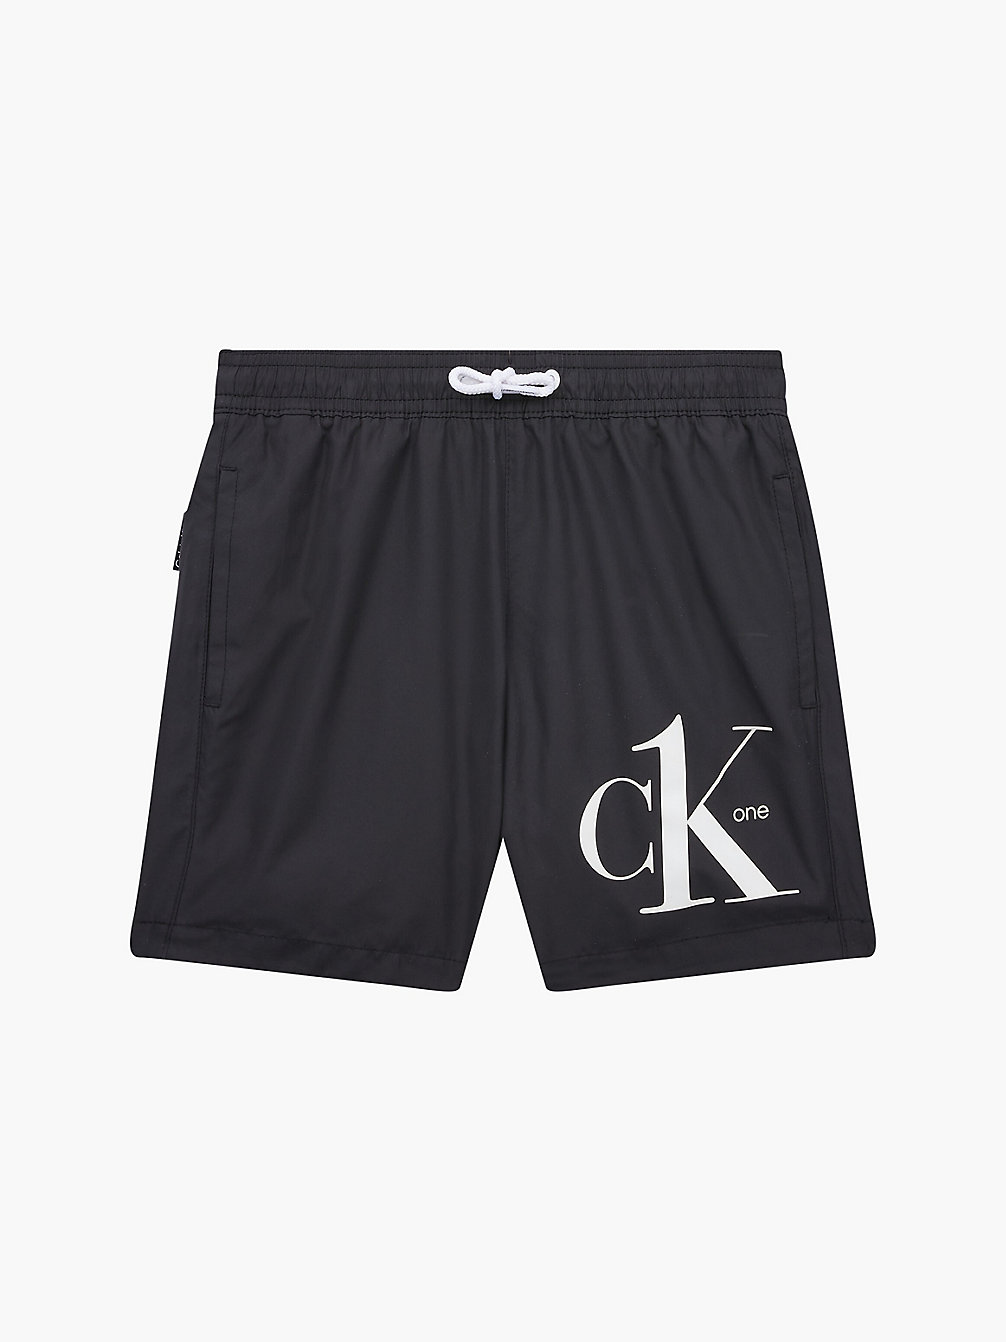 PVH BLACK Boys Swim Shorts - CK One undefined boys Calvin Klein